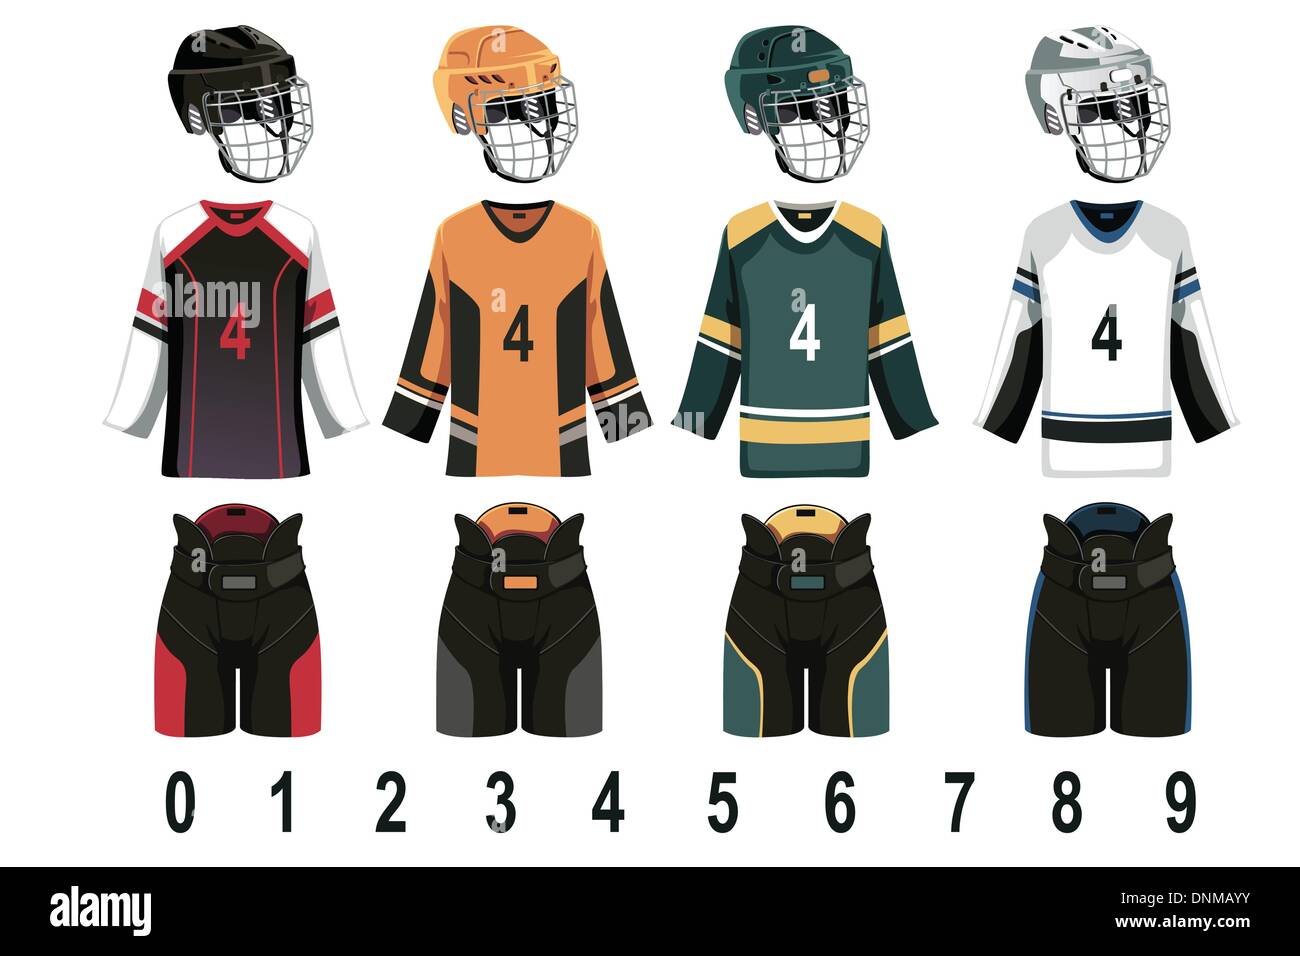 Un vecteur illustration de jersey de hockey sur glace Illustration de Vecteur